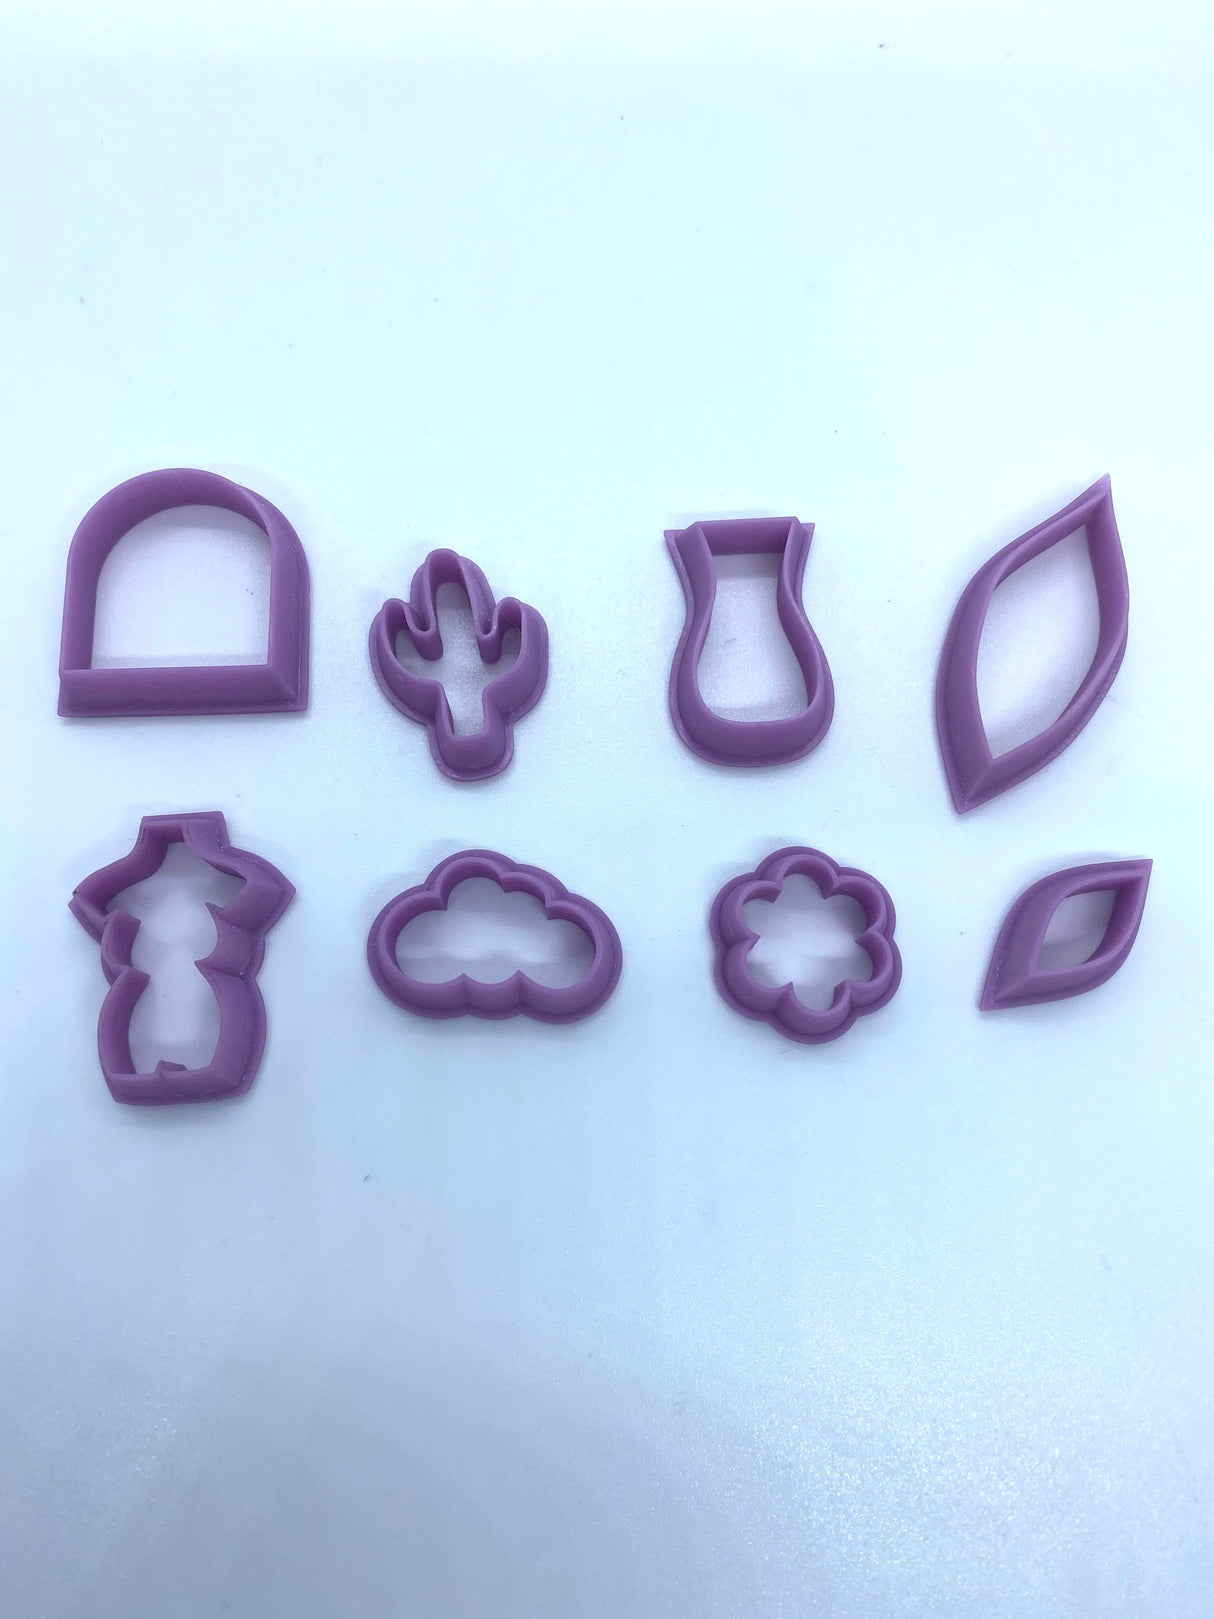 Resin polymer clay shape cutters (Kita MK II), Gilly cutters, clay cutters, shapes, Clay Tools, Clay Supplies